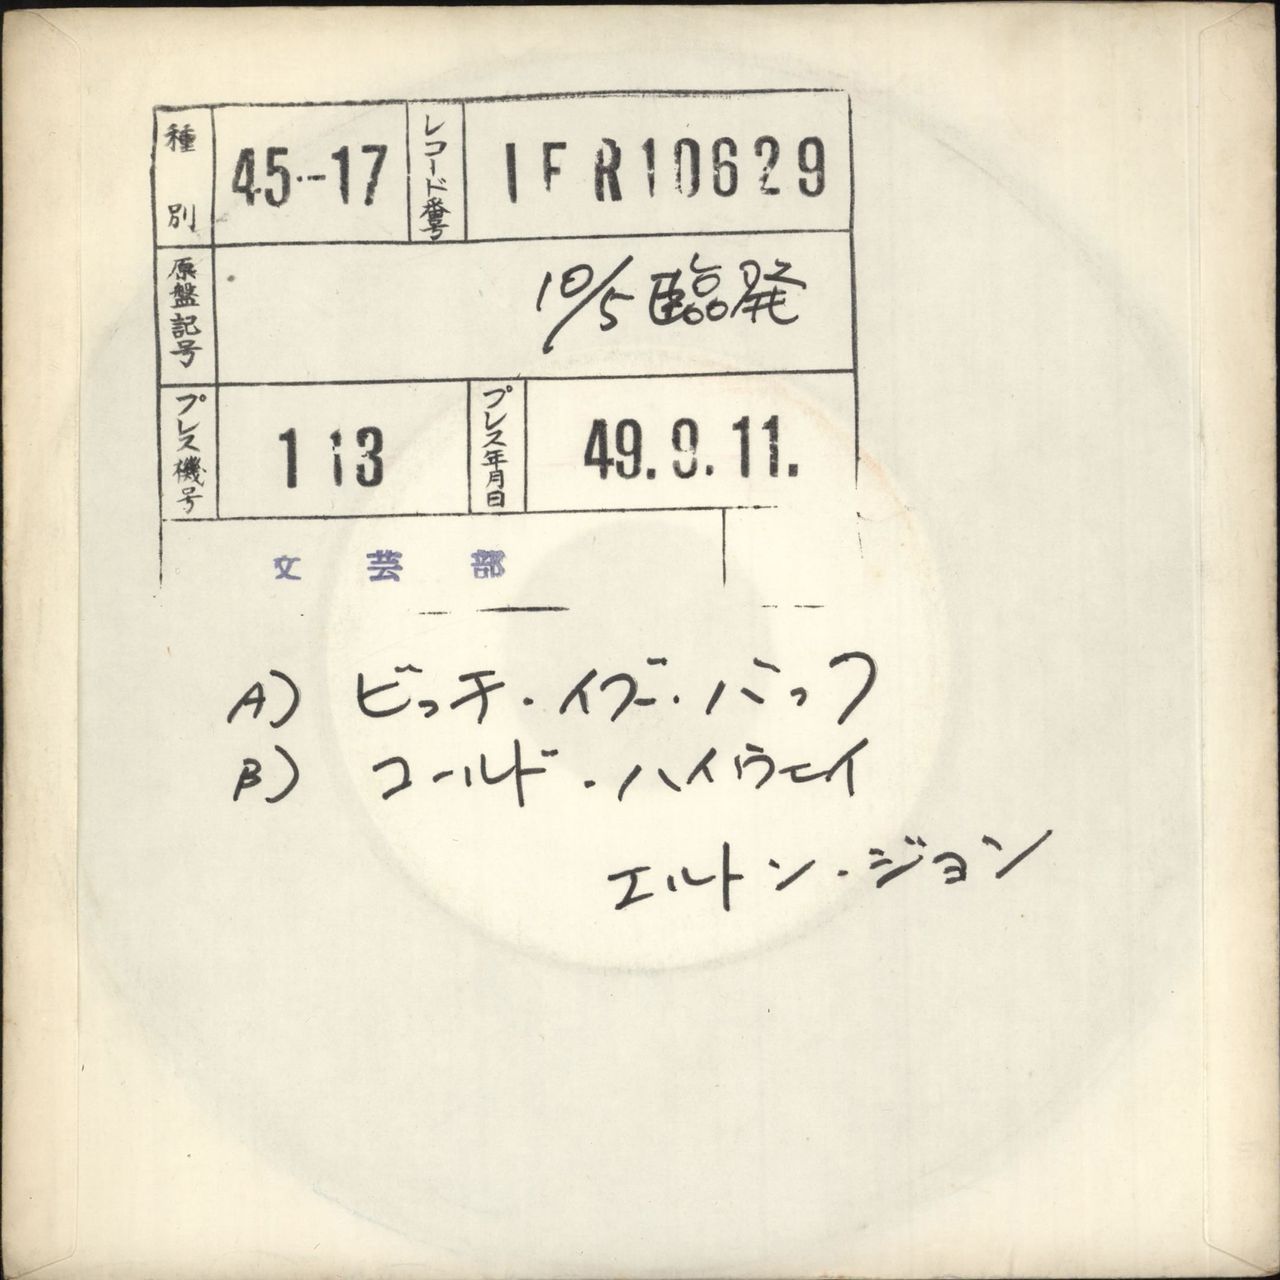 Elton John The Bitch Is Back - Test Pressing Japanese Promo 7" vinyl single (7 inch record / 45) JOH07TH730187